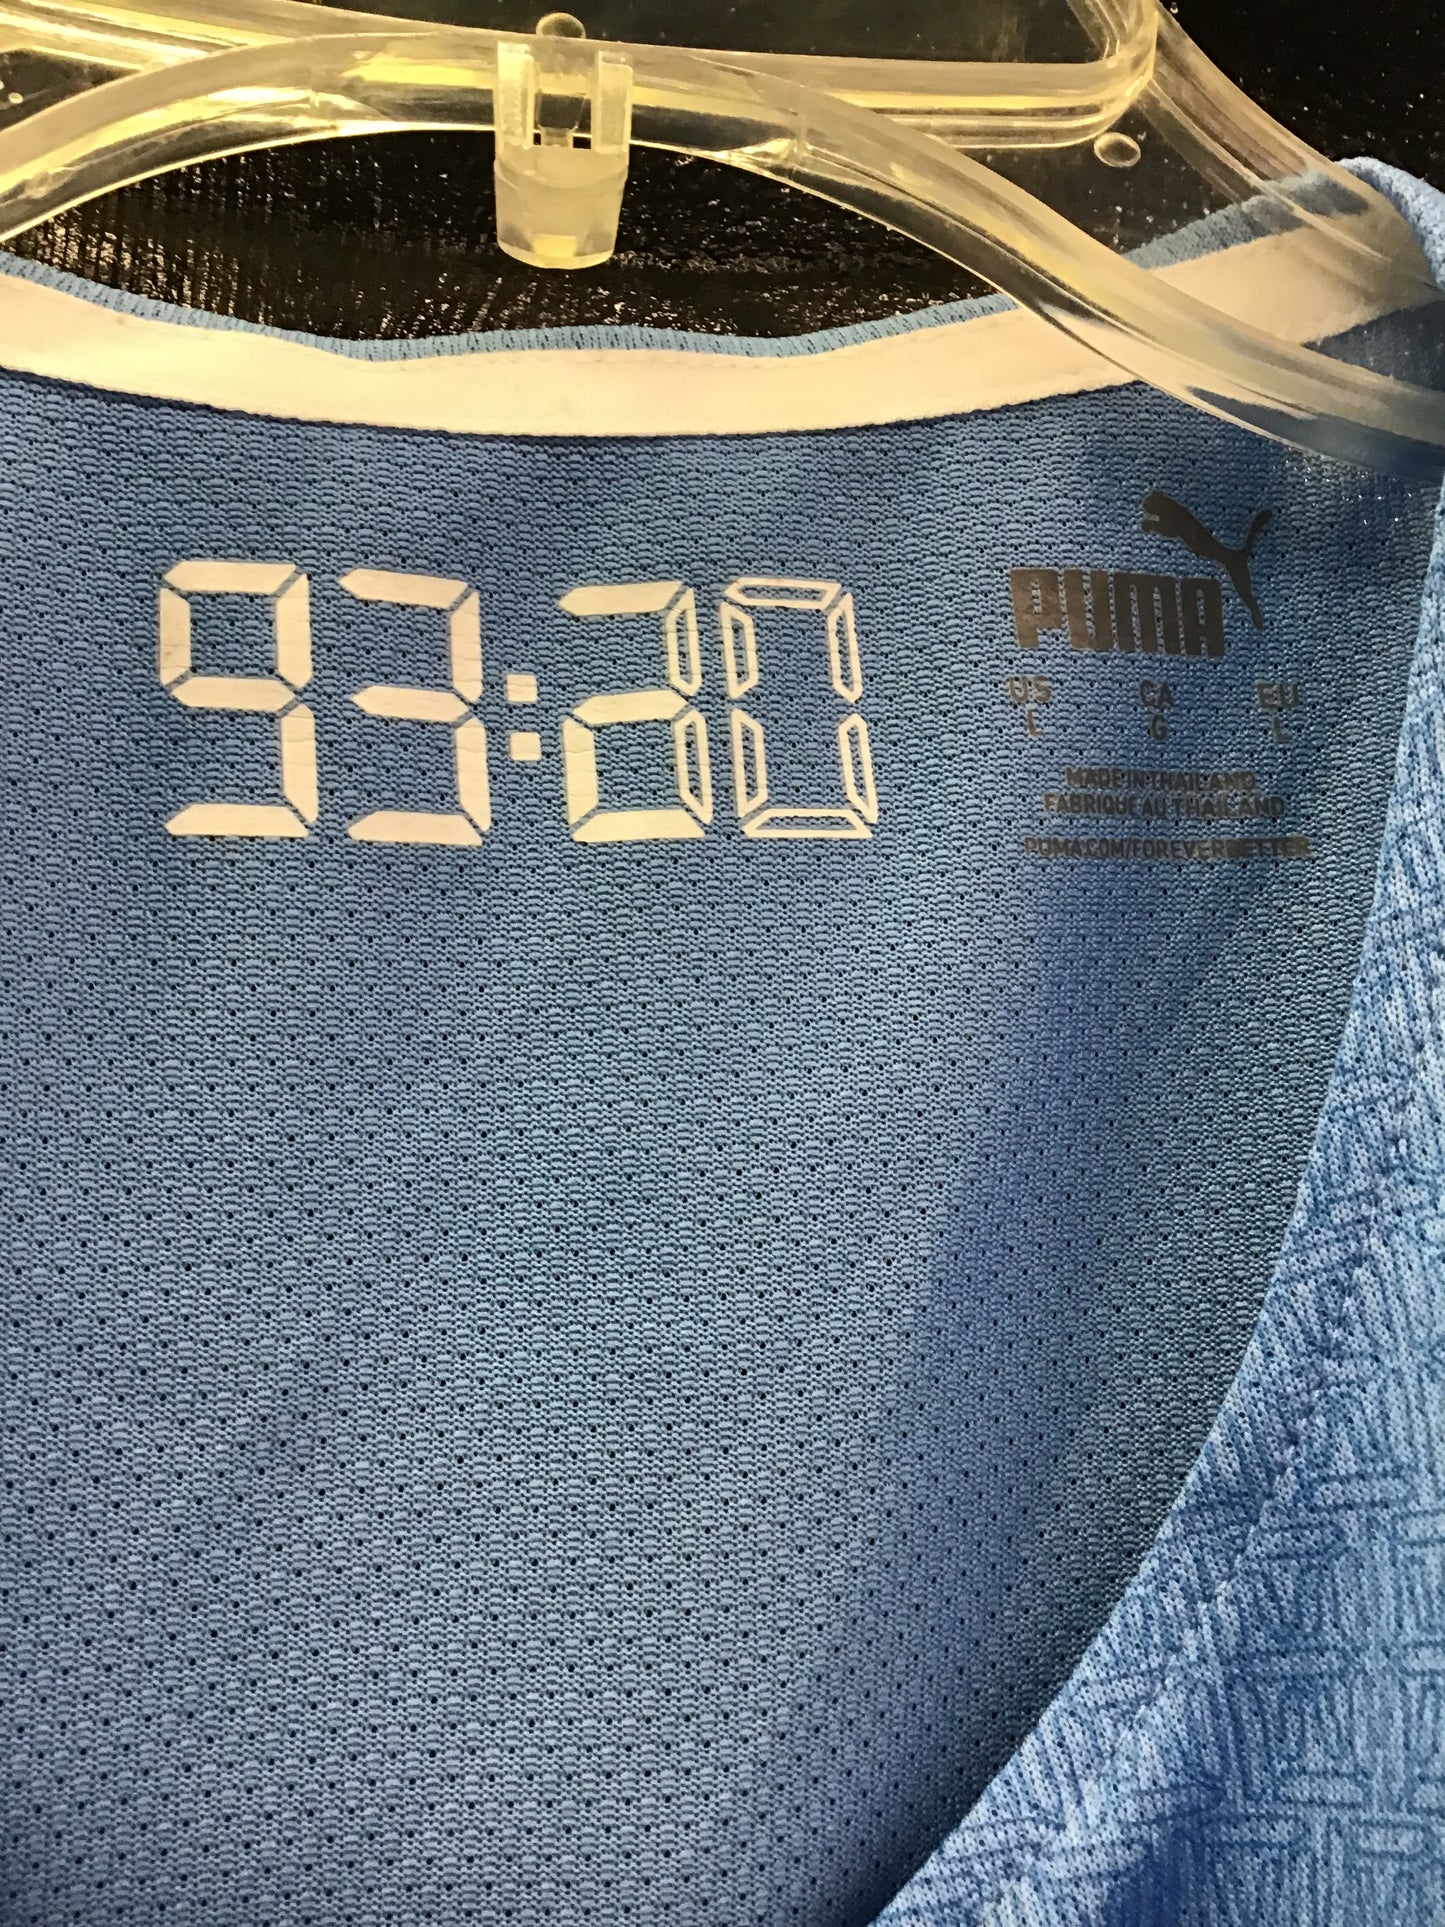 Puma Manchester City Authentic 93:20 Jersey, Size L